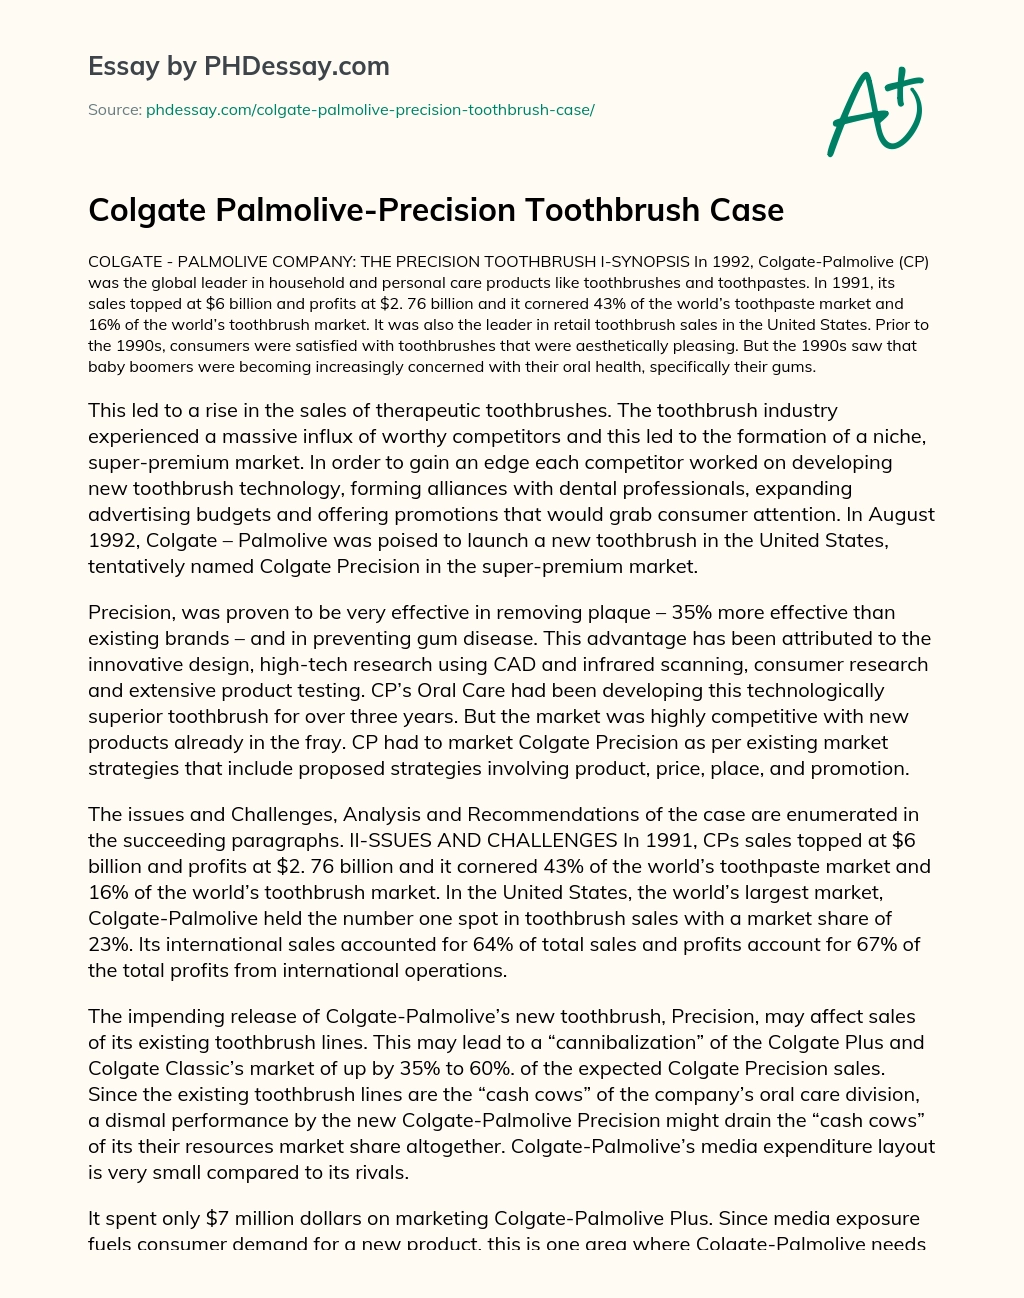 Colgate Palmolive-Precision Toothbrush Case essay